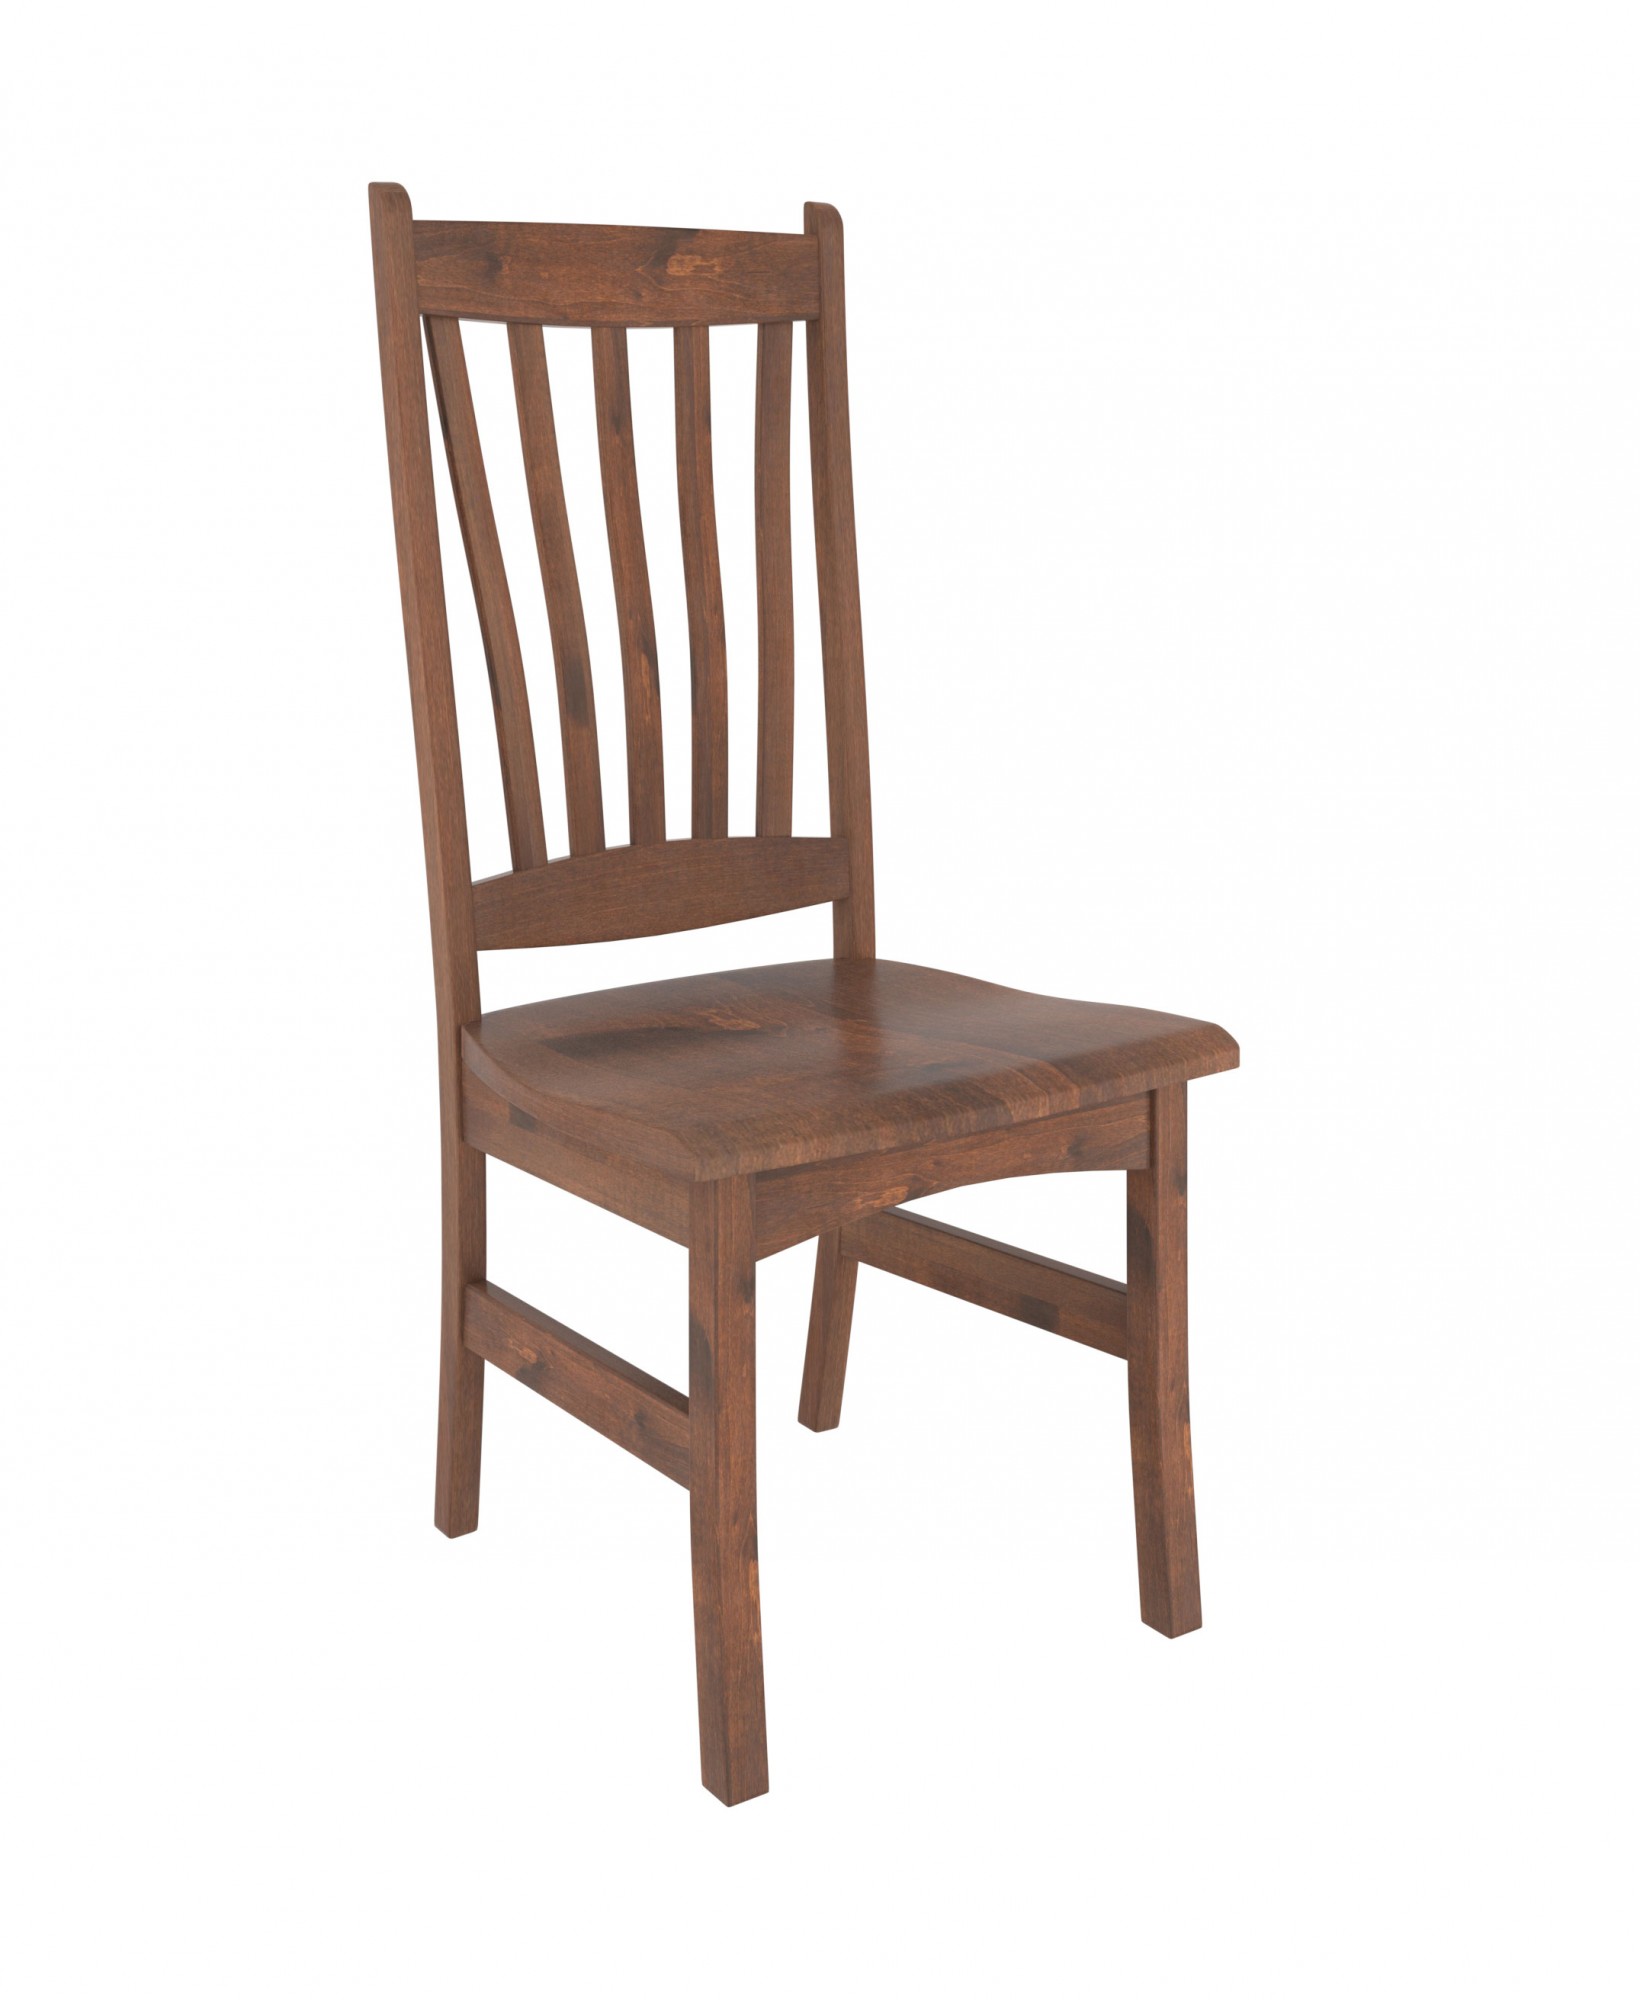 Benton Side Chair